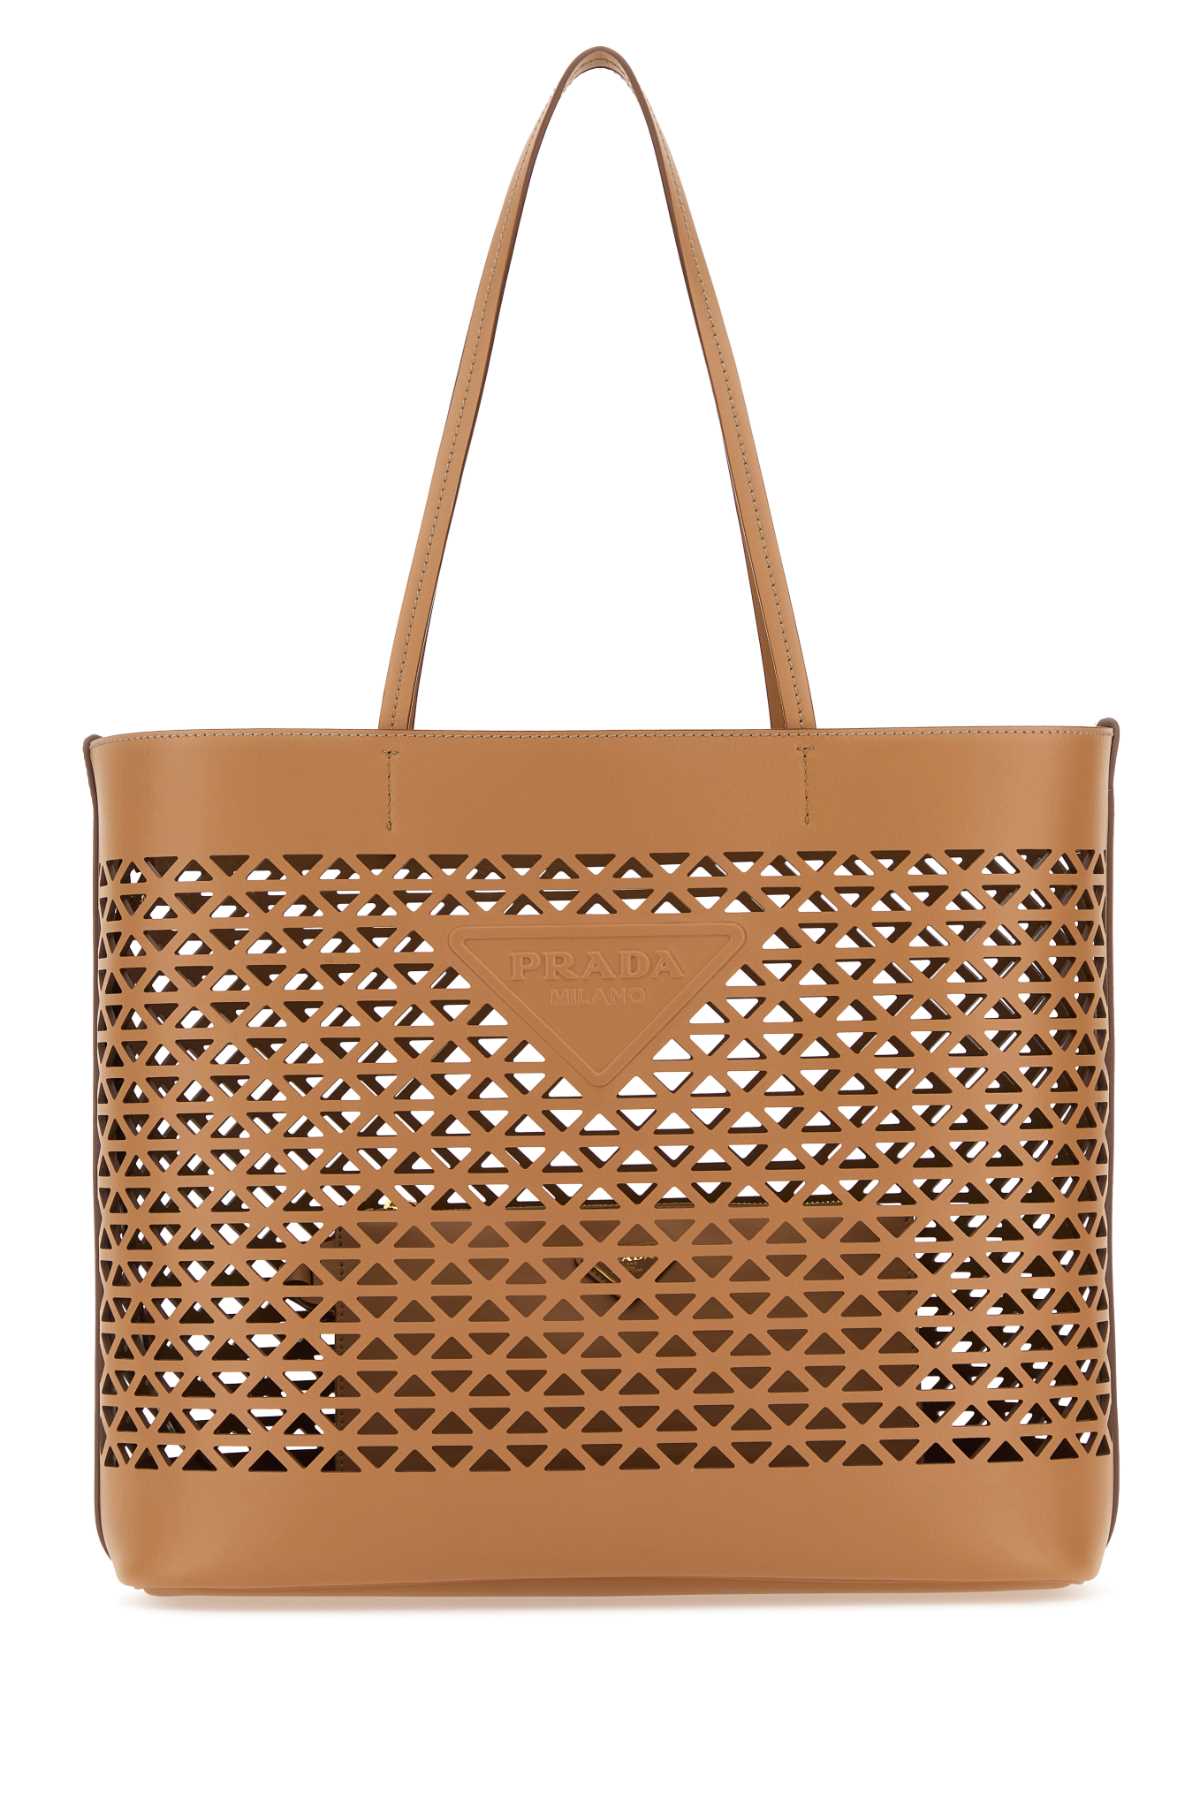 Prada Sand Leather Shopping Bag